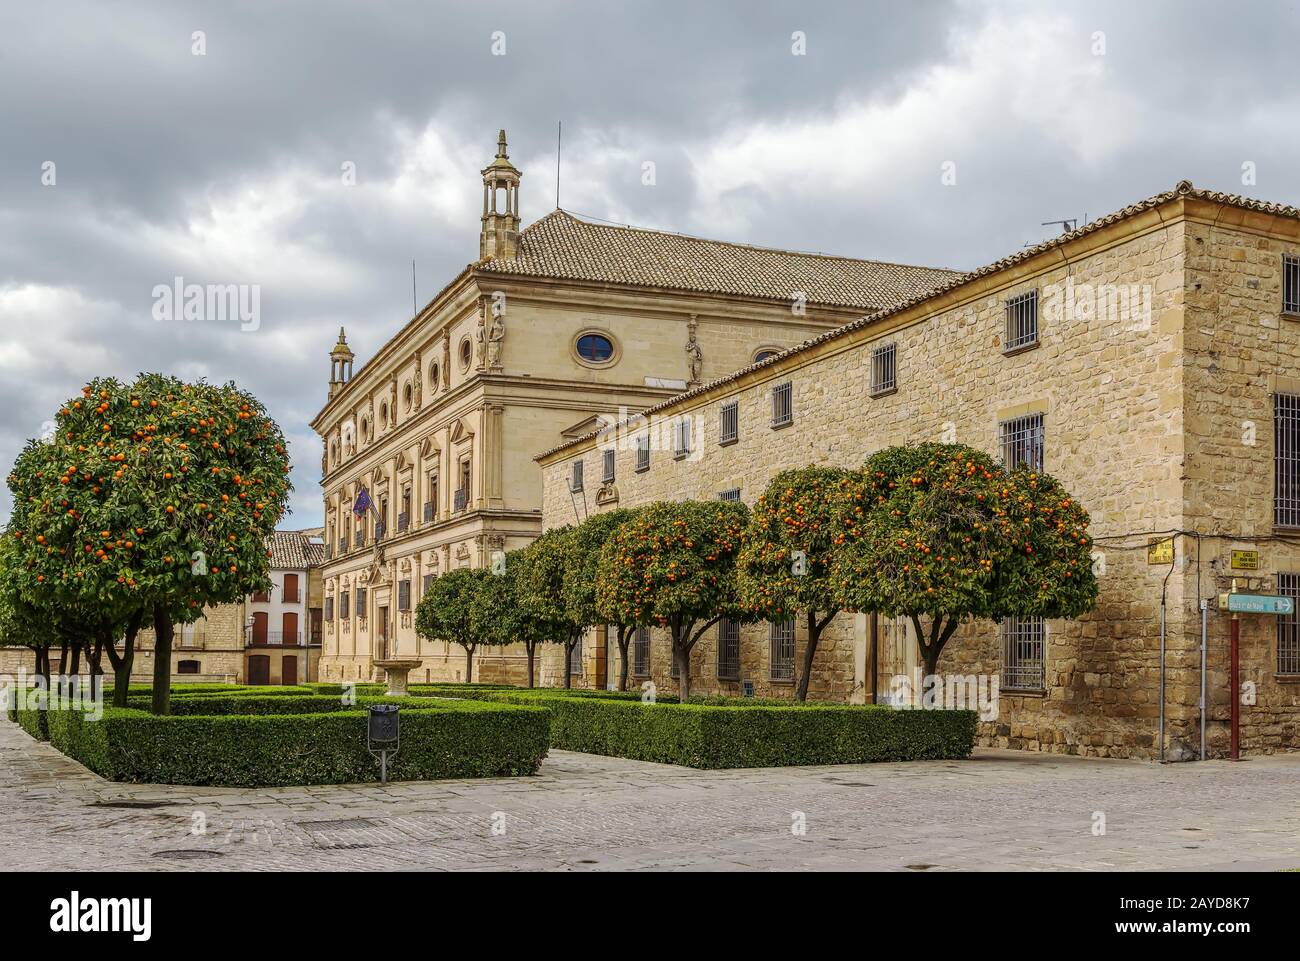 Der historische Hauptplatz in Ubeda, Spanien Stockfoto